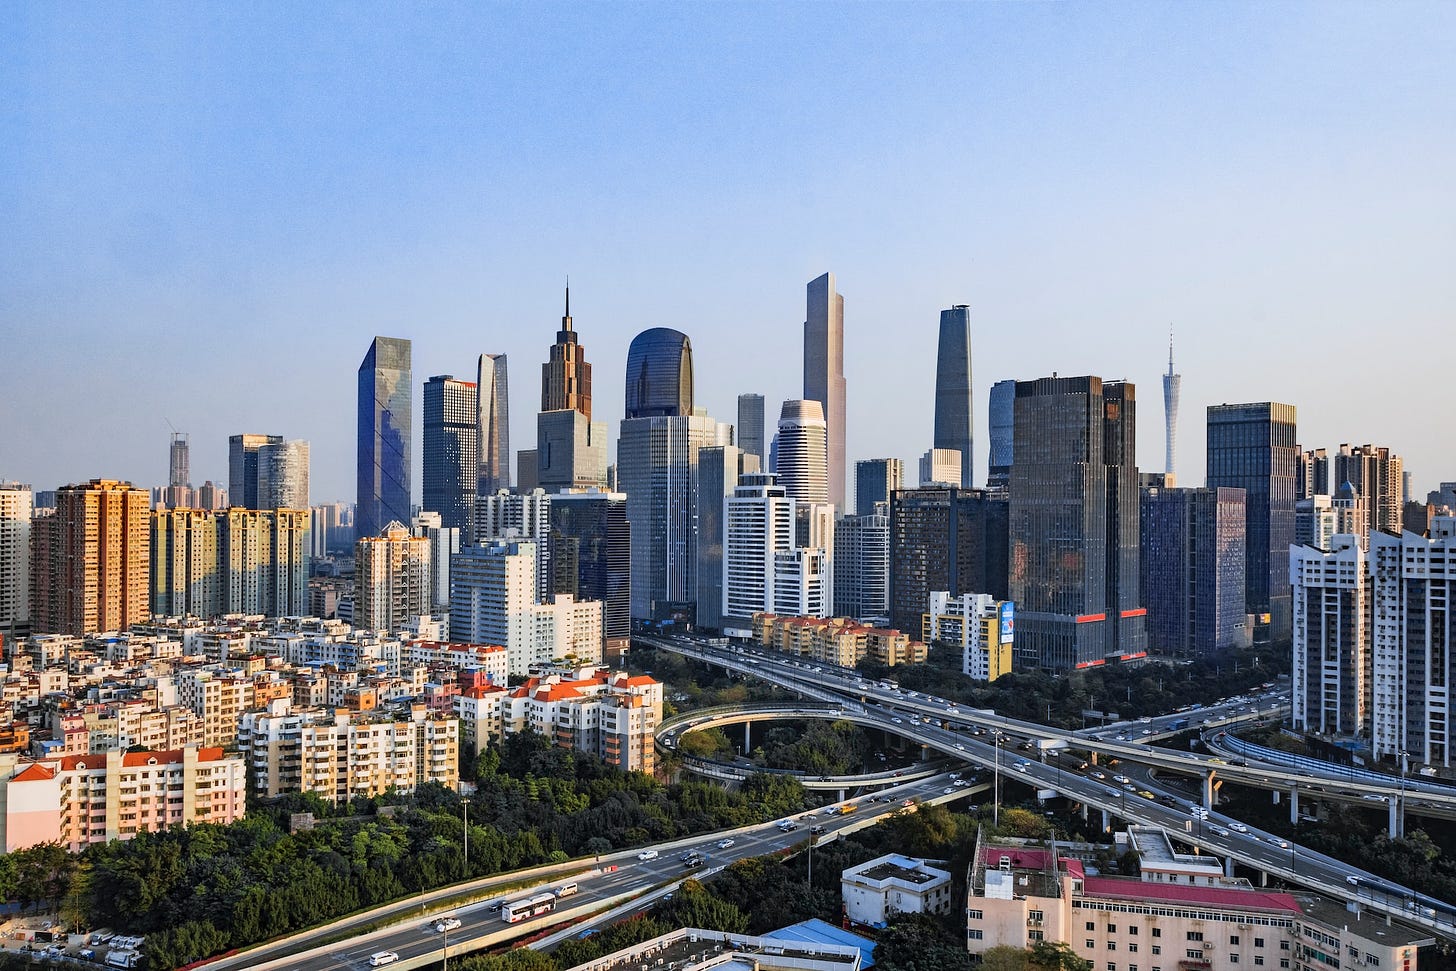 View of city buildings in Guangzhou, China